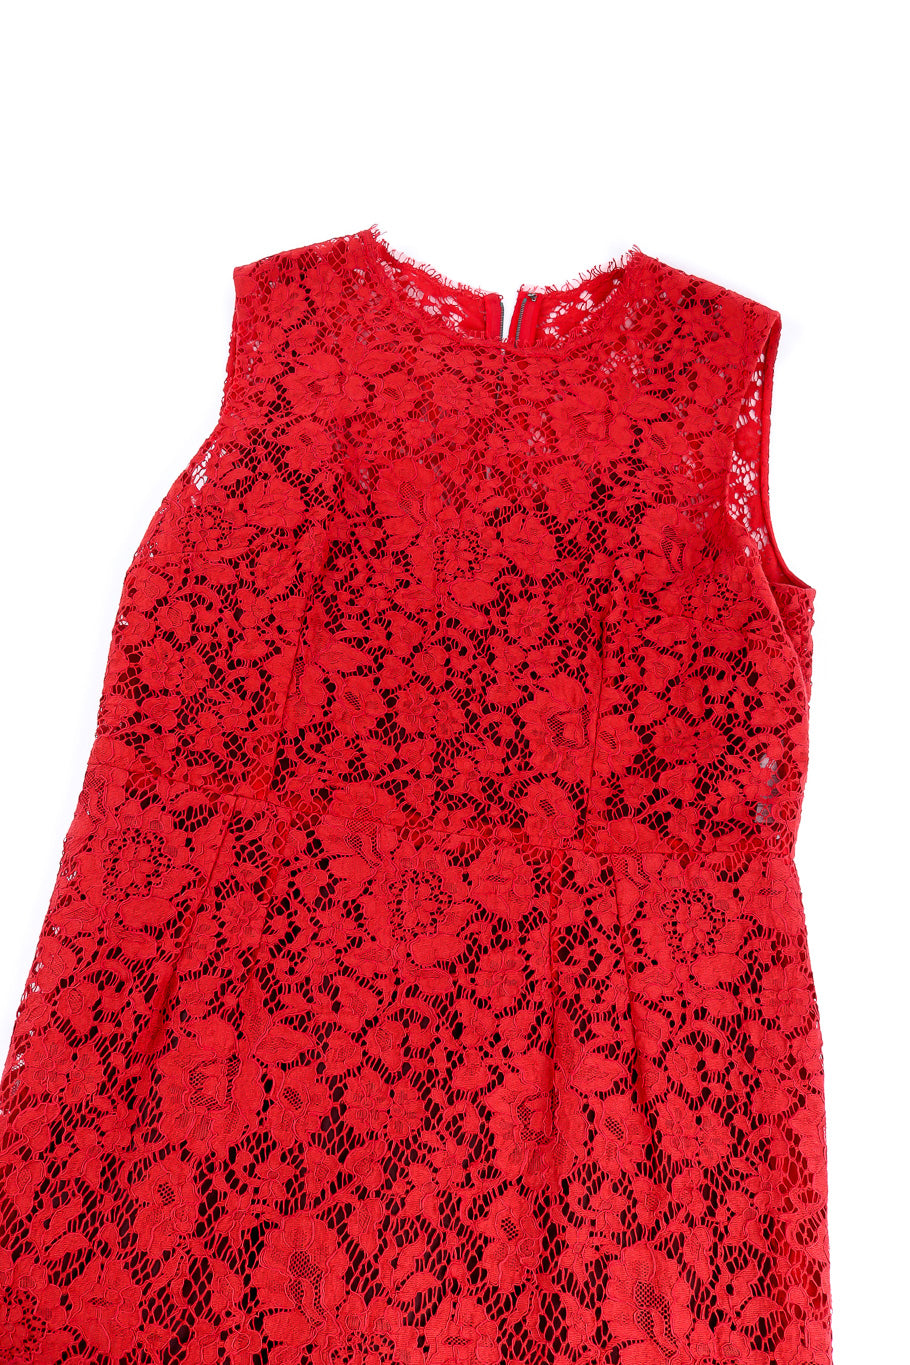 Dolce & Gabbana scarlet midi dress flat-lay @recessla